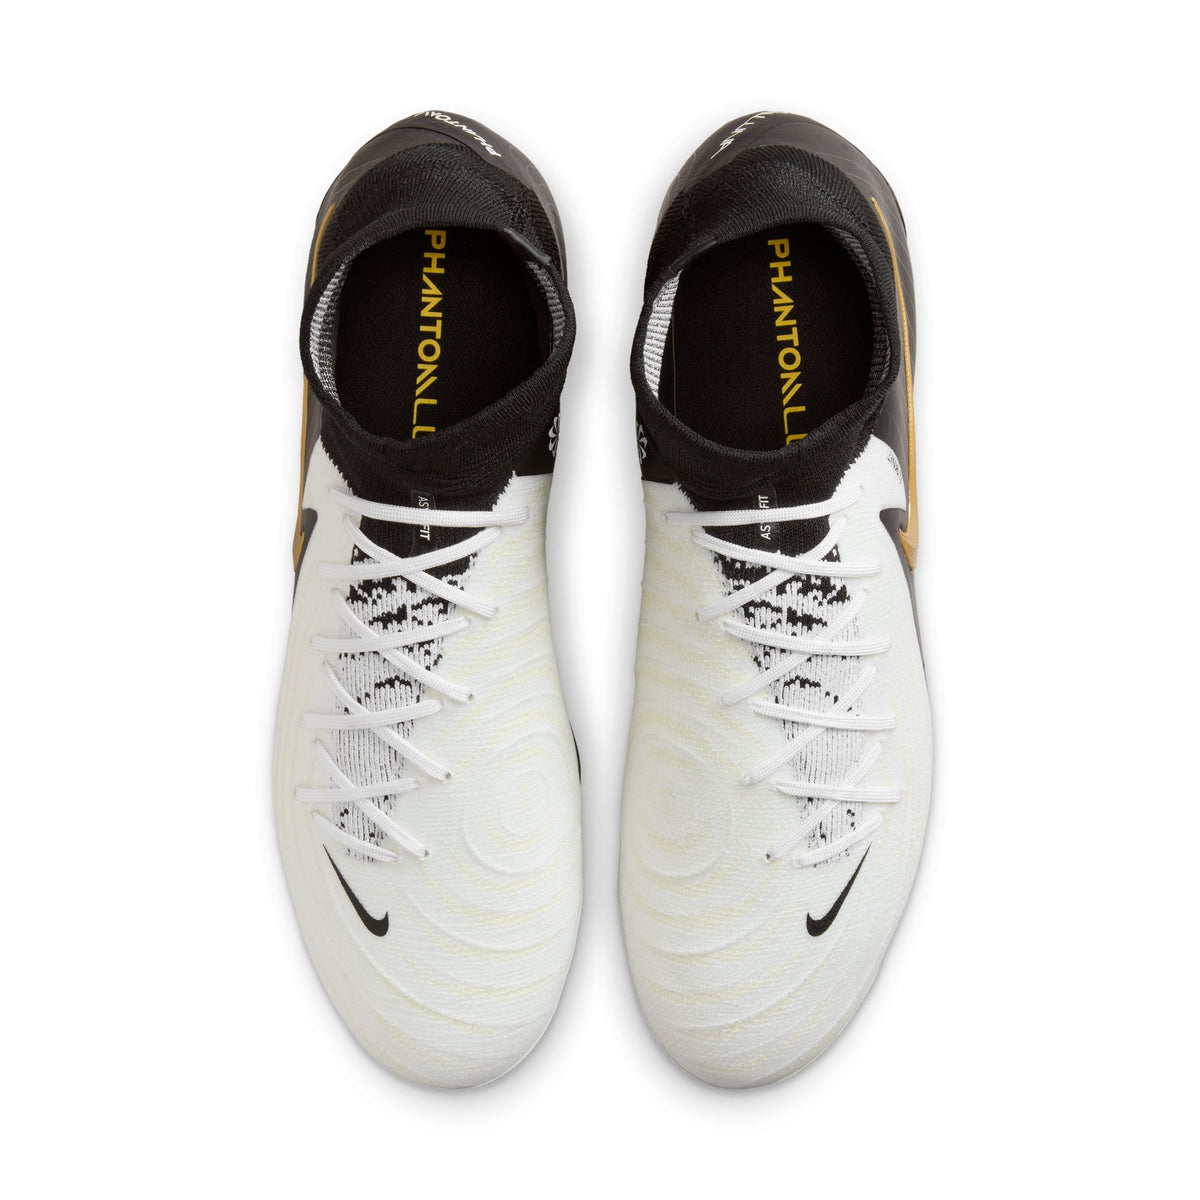 Nike Phantom Luna II Pro FG Firm Ground Soccer Cleat - White/Black ...